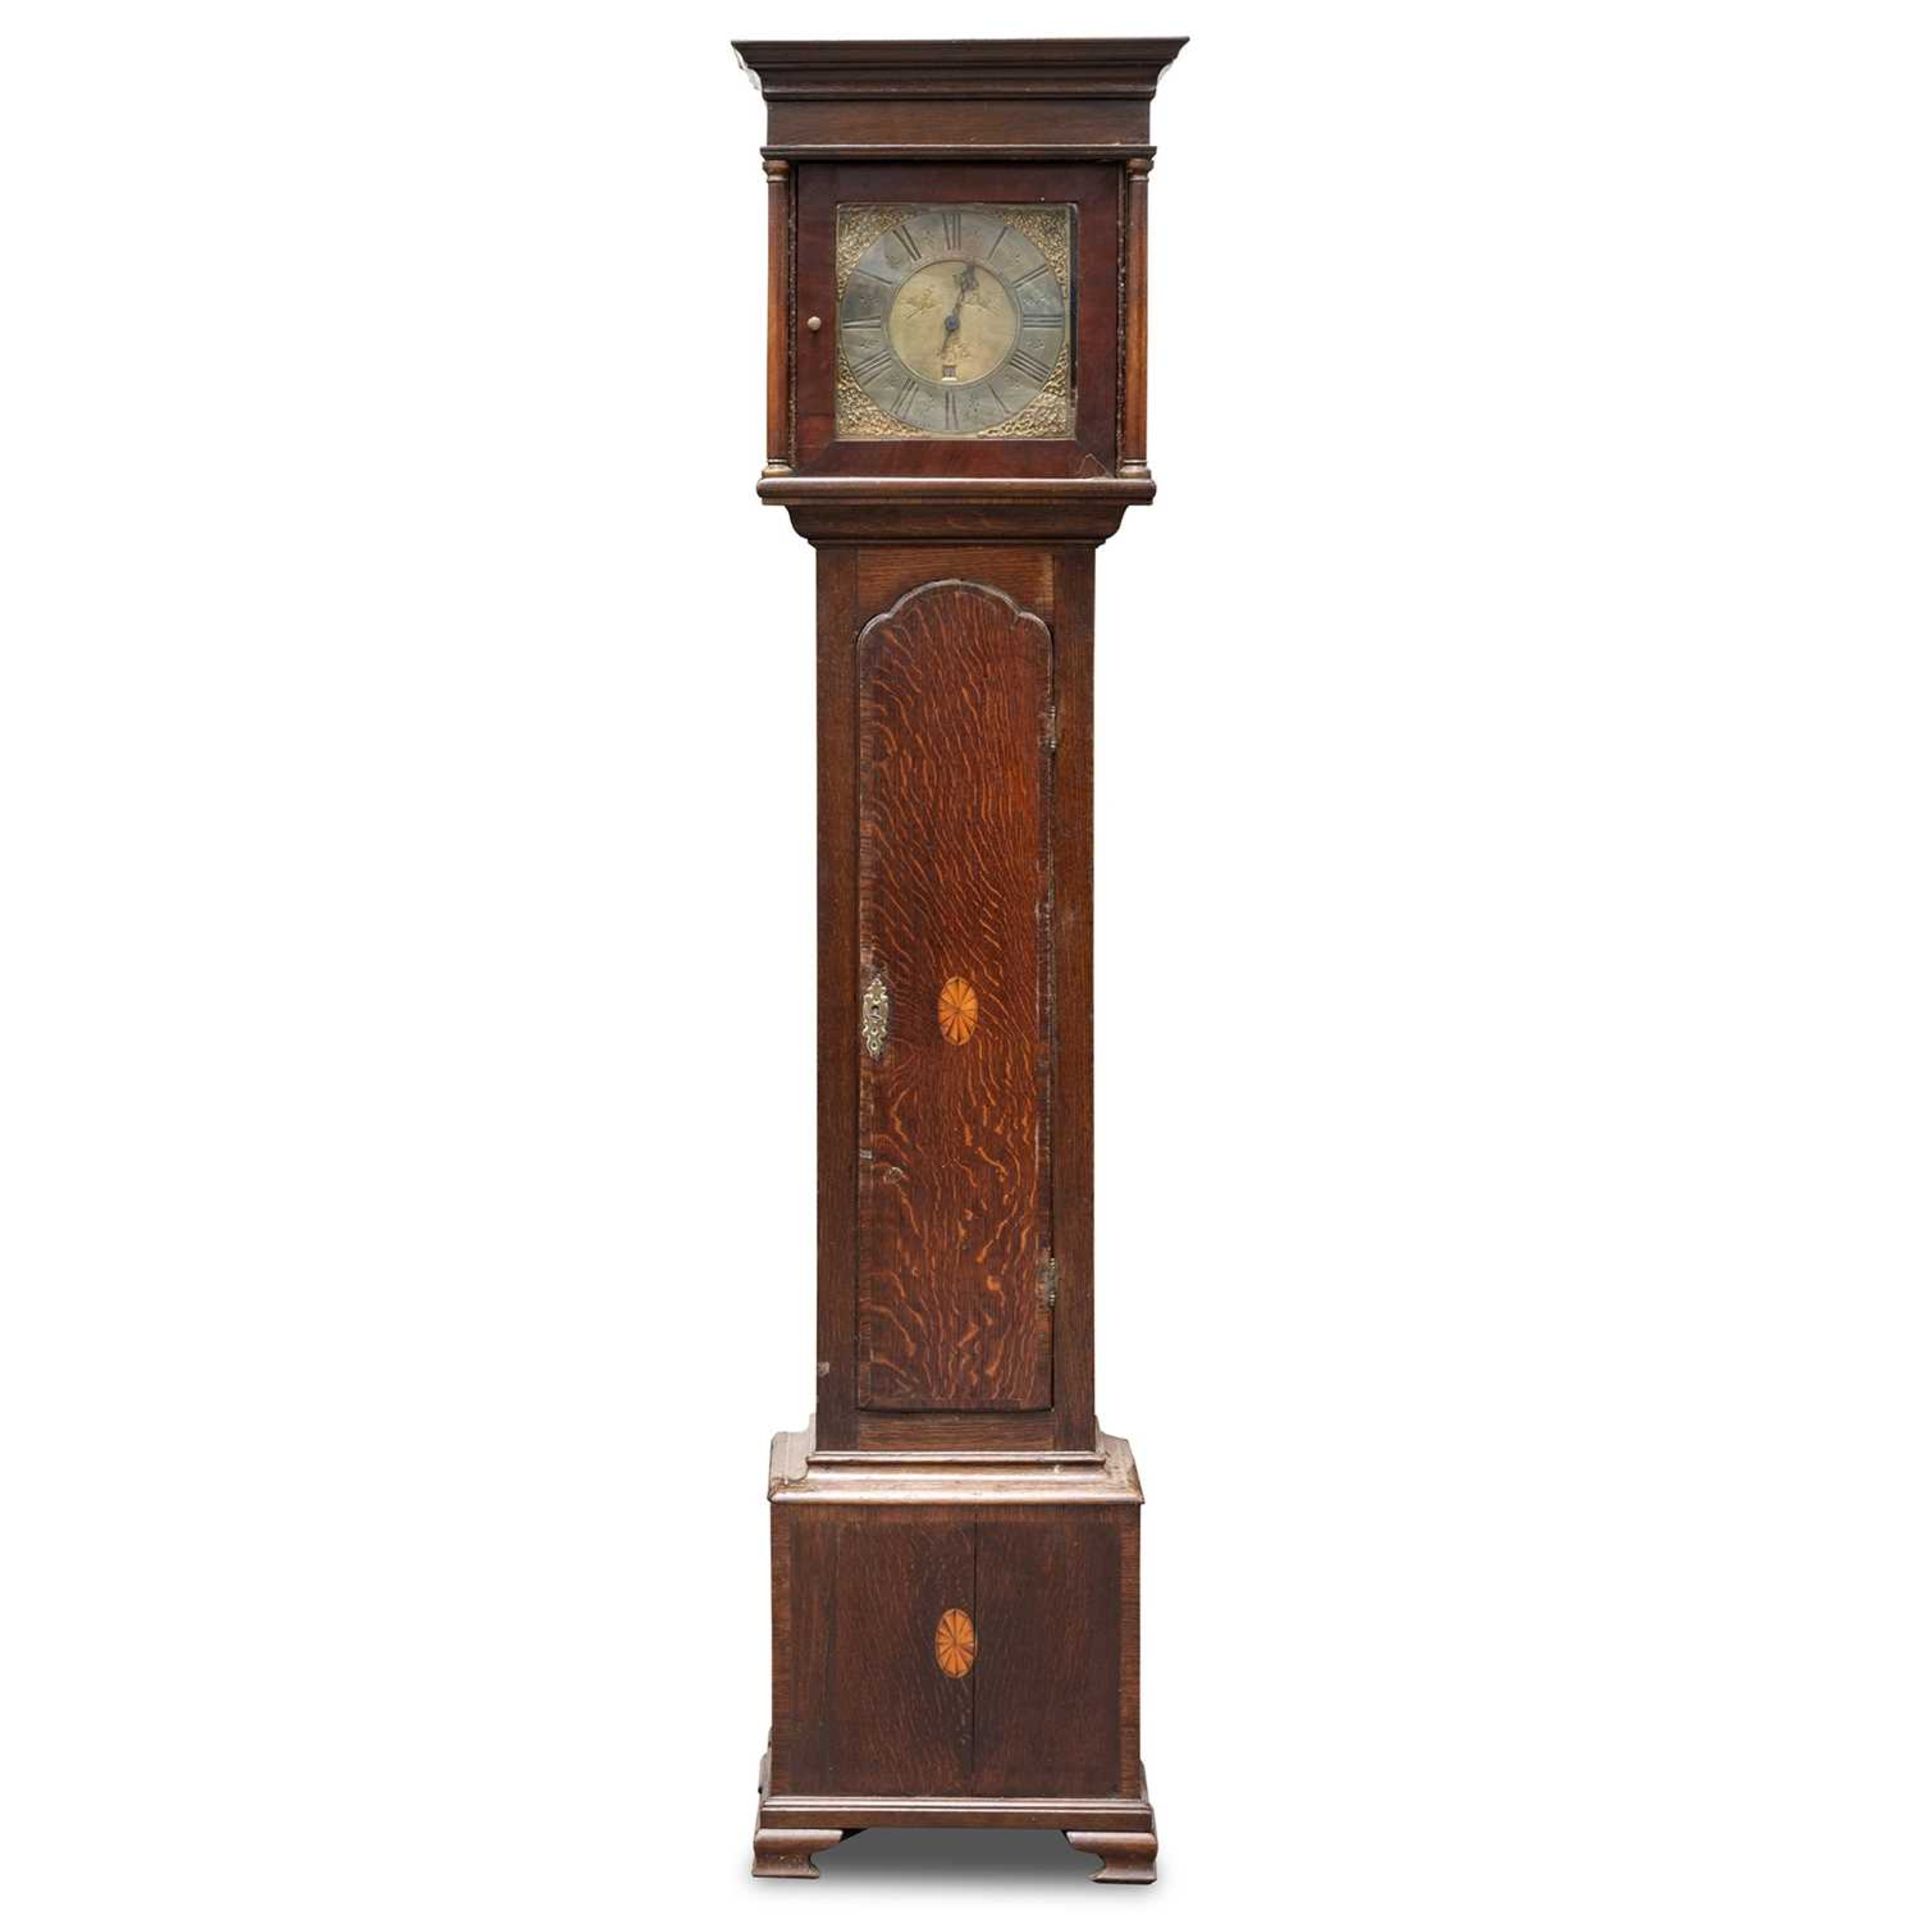 AN 18TH CENTURY OAK THIRTY-HOUR LONGCASE CLOCK, SIGNED JOHN BUNTING, LONG BUCKBY